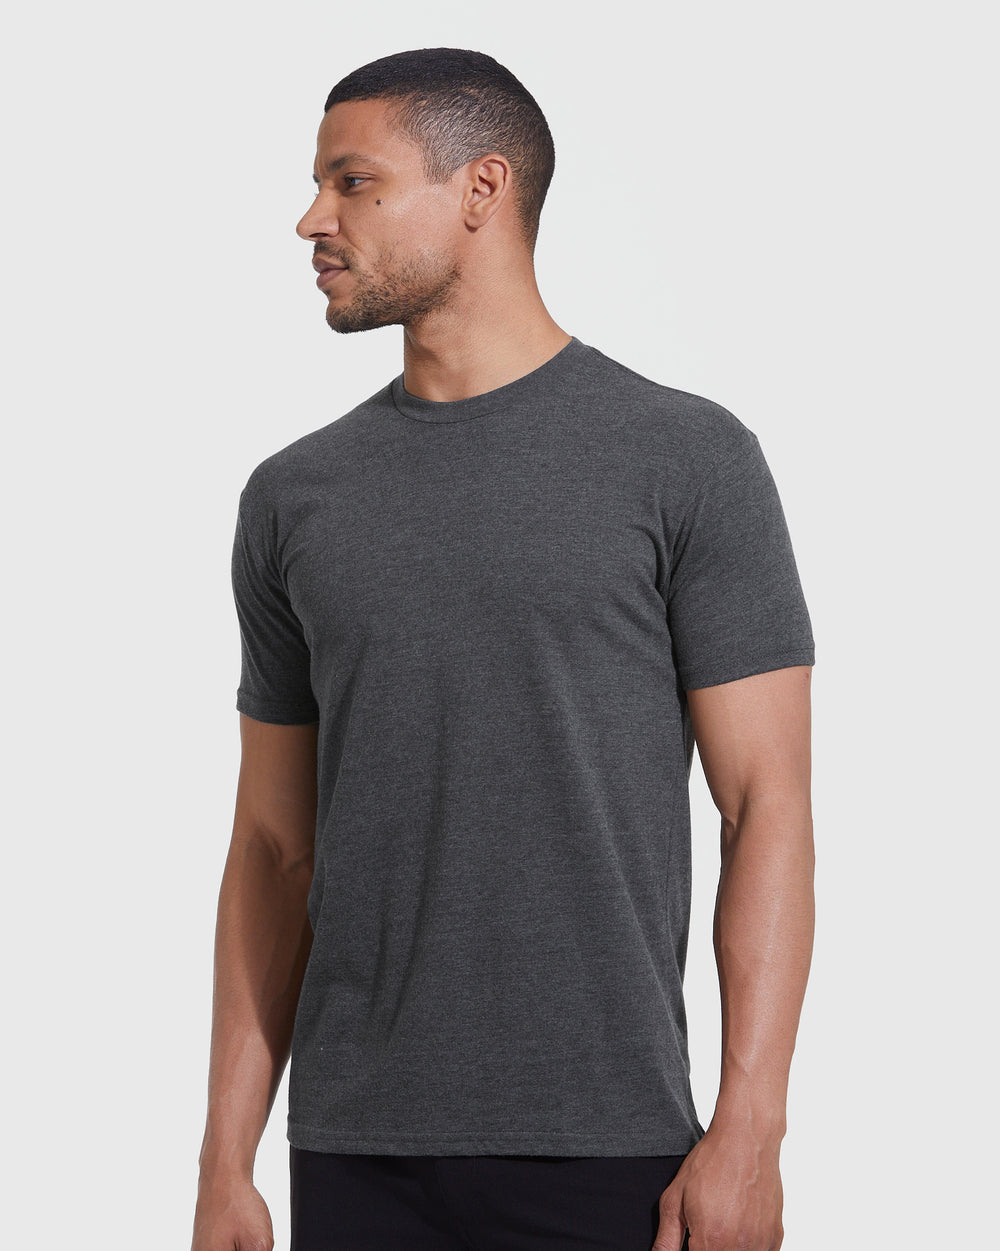 Men's T-Shirt - Grey - M